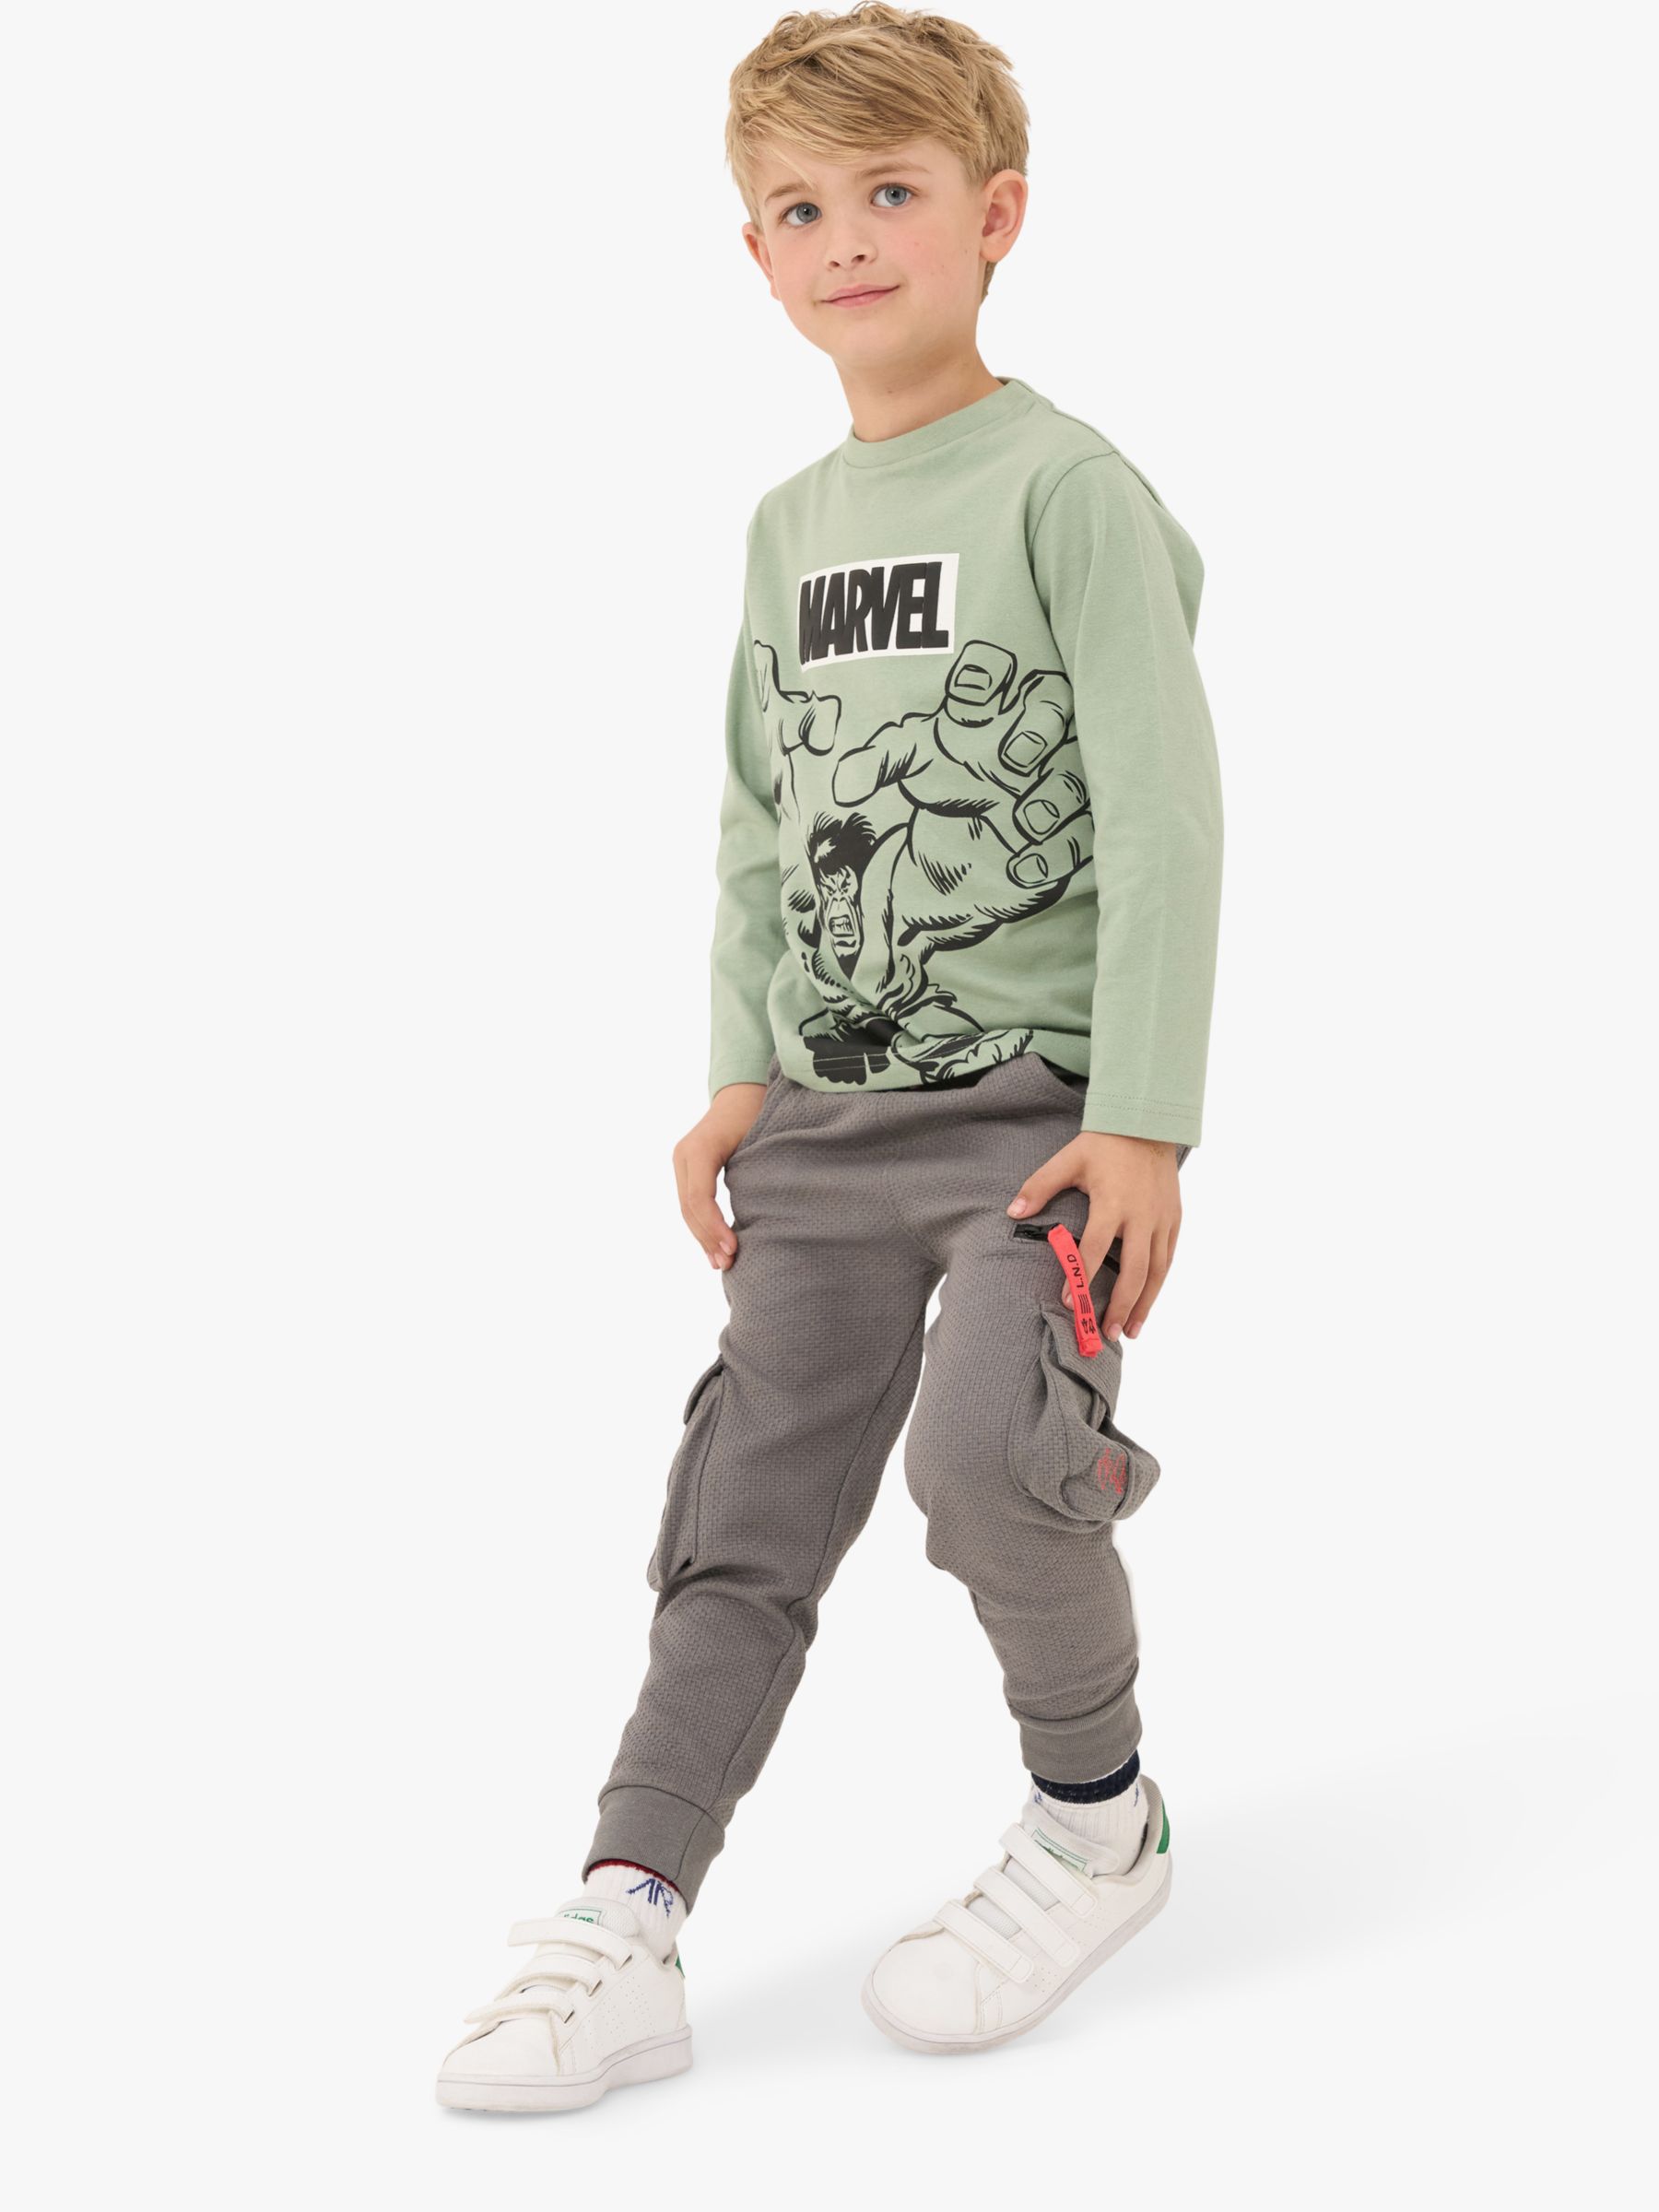 Buy Angel & Rocket Kids' Marvel Long Sleeve T-Shirt, Green Online at johnlewis.com